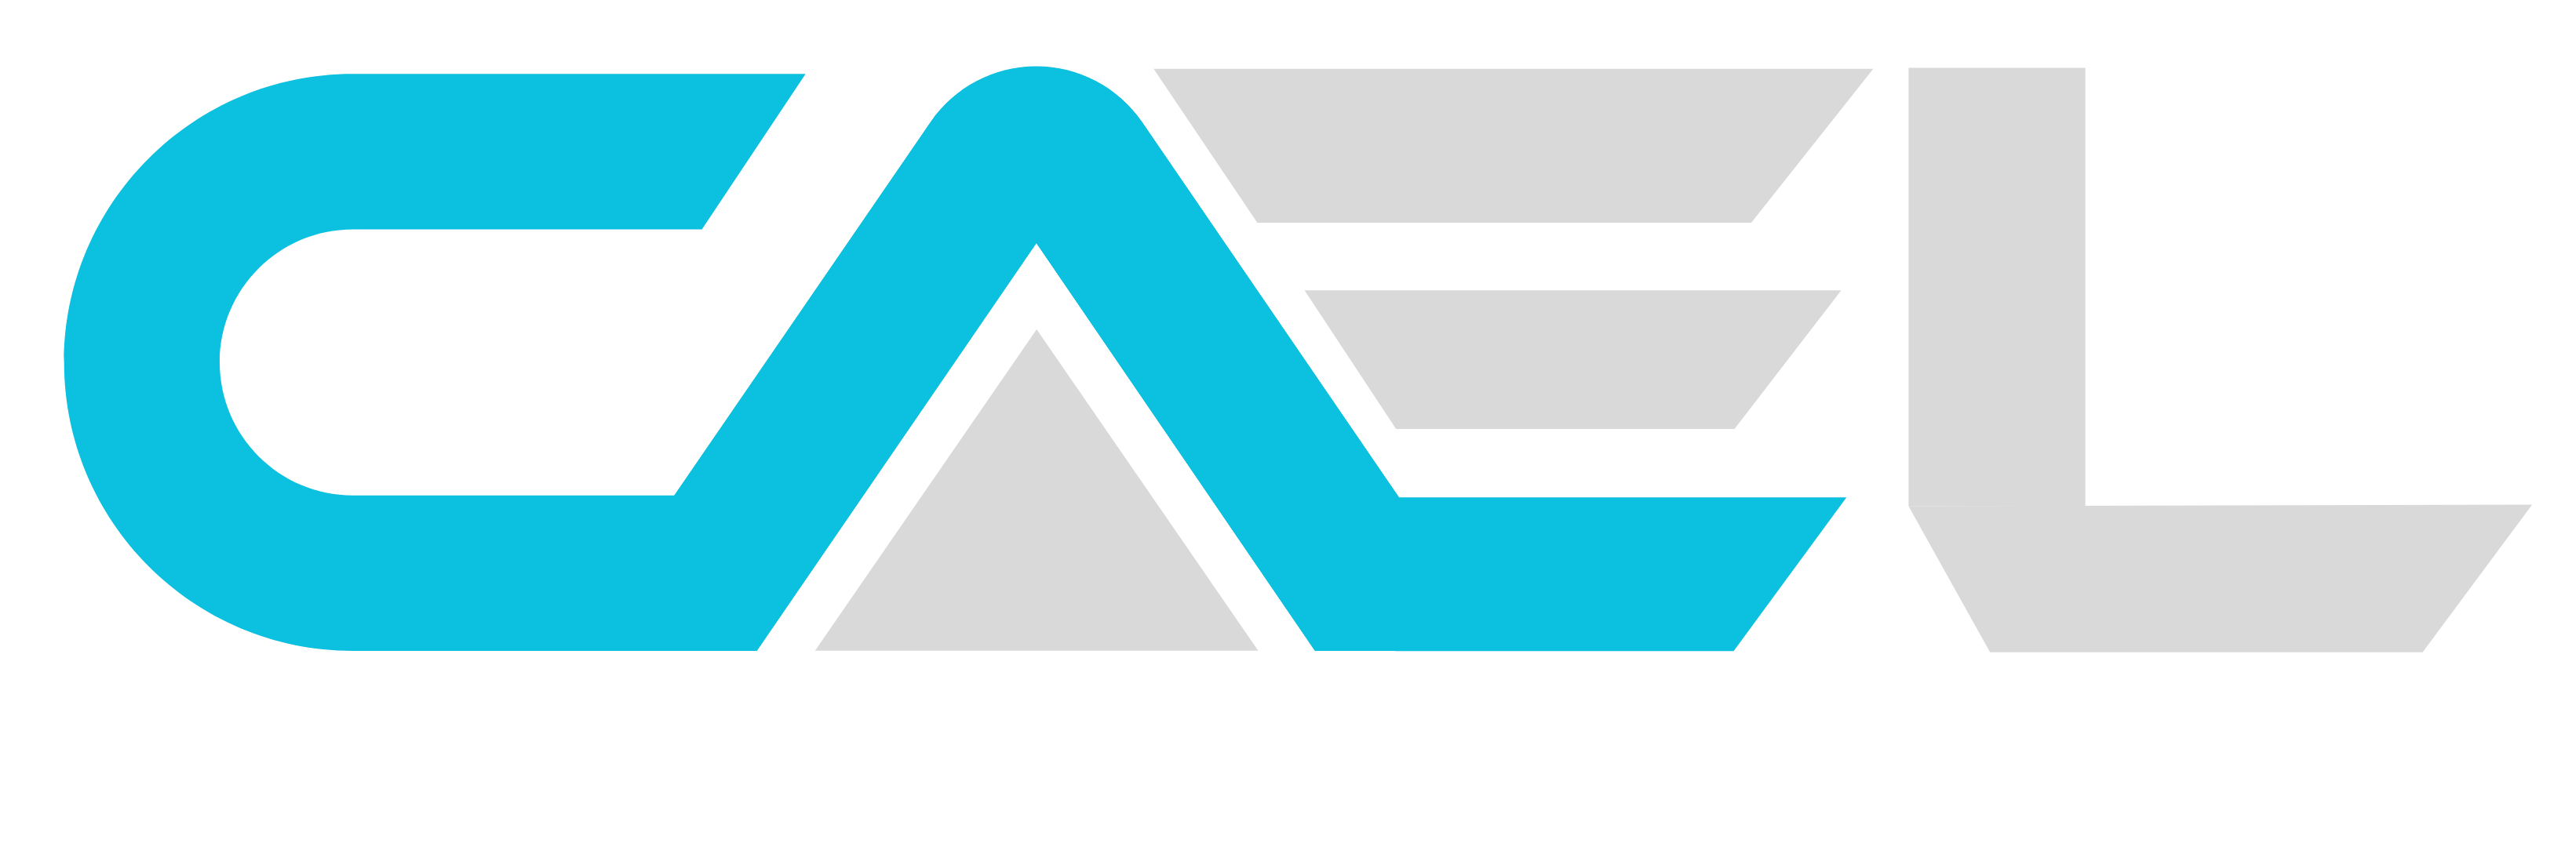 Capital Automotive Equipment